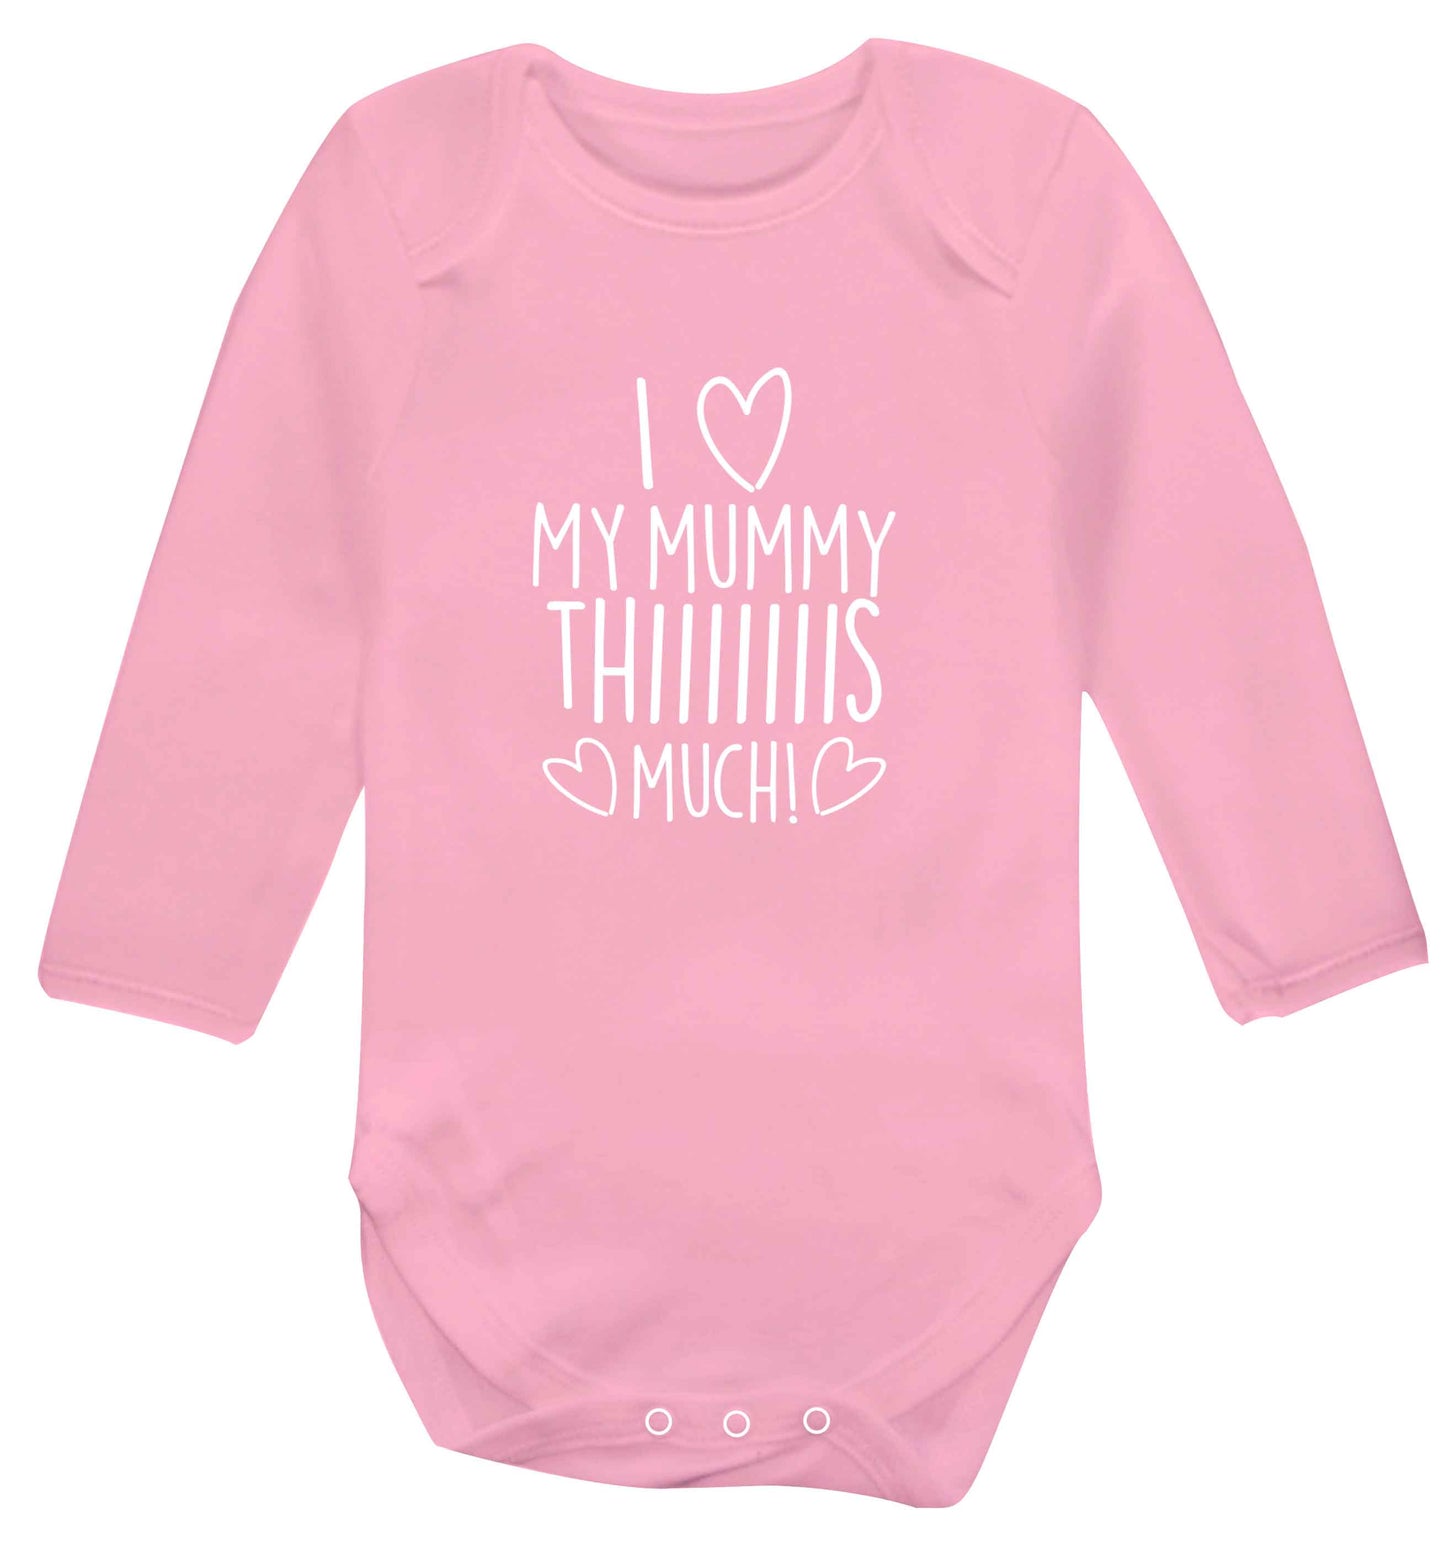 I love my mummy thiiiiis much! baby vest long sleeved pale pink 6-12 months